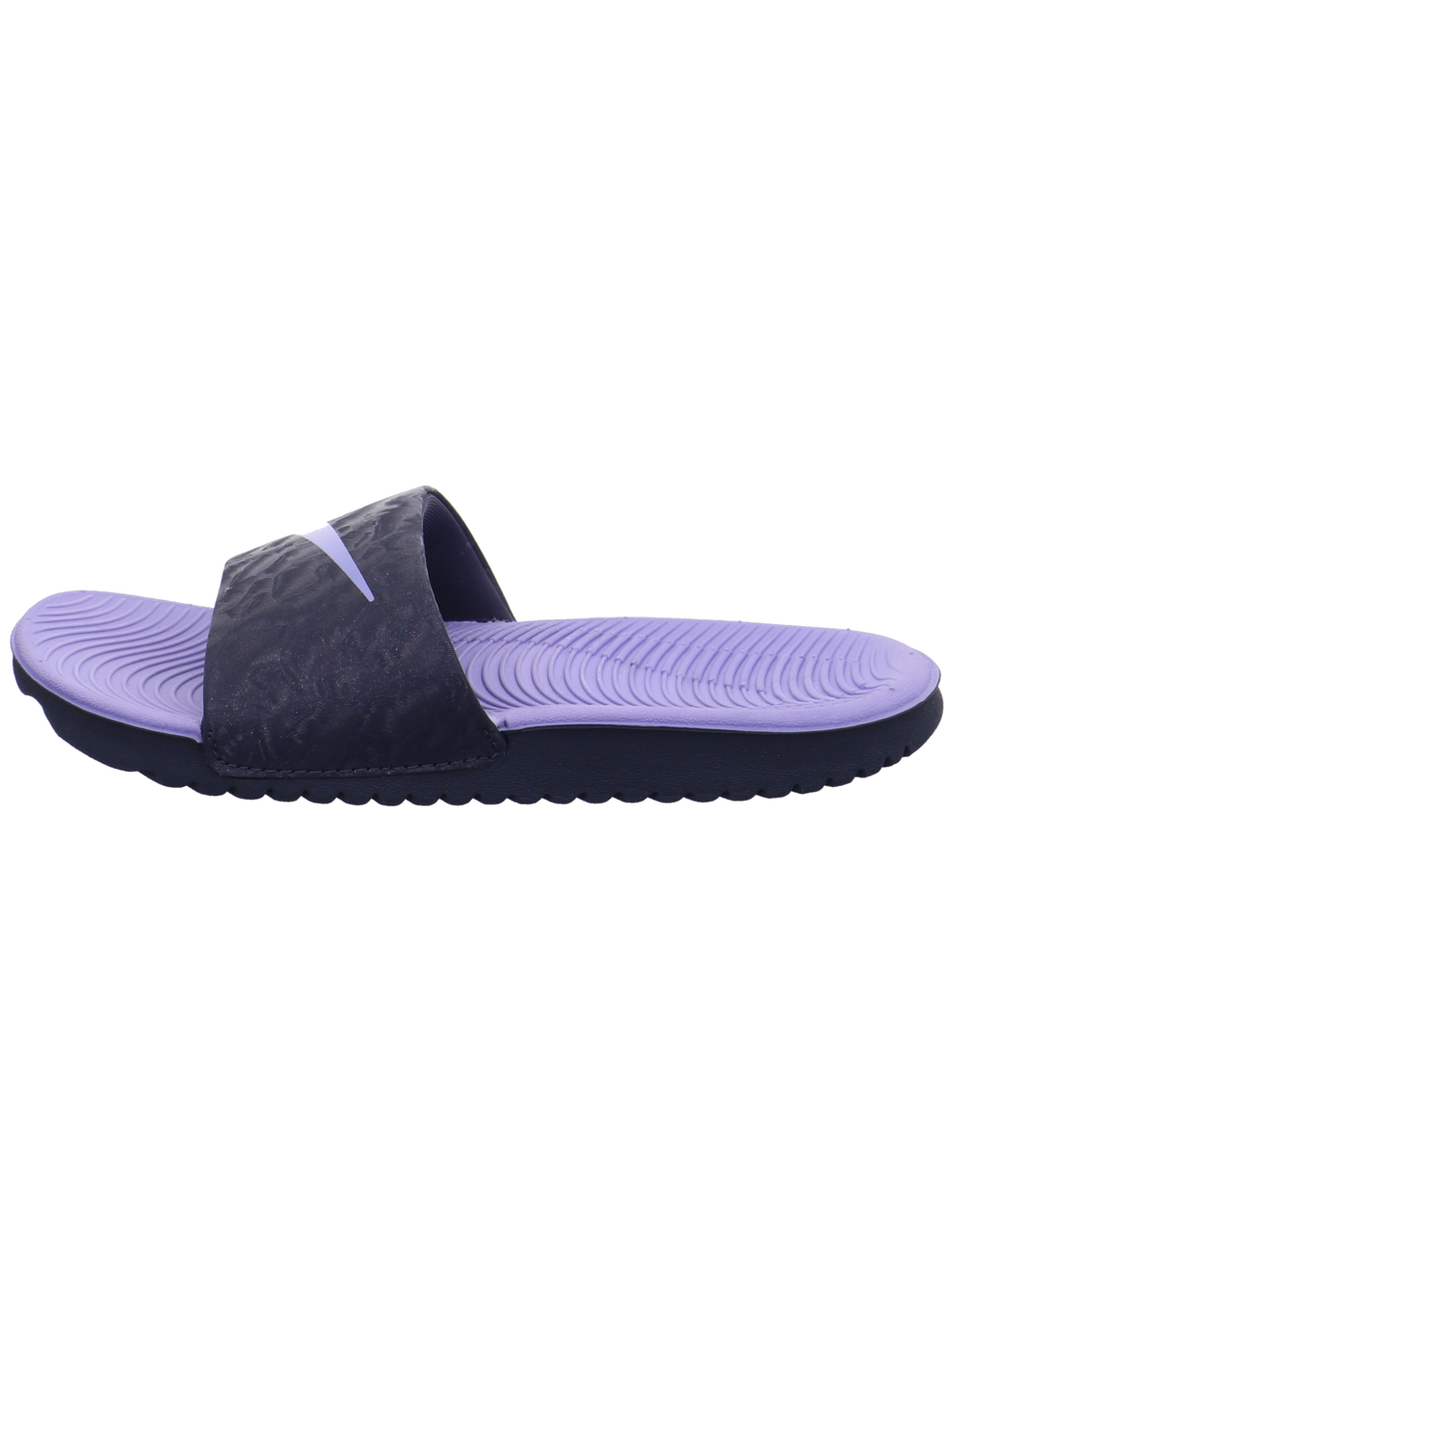 Nike Schuhe  blau kombi Bild1